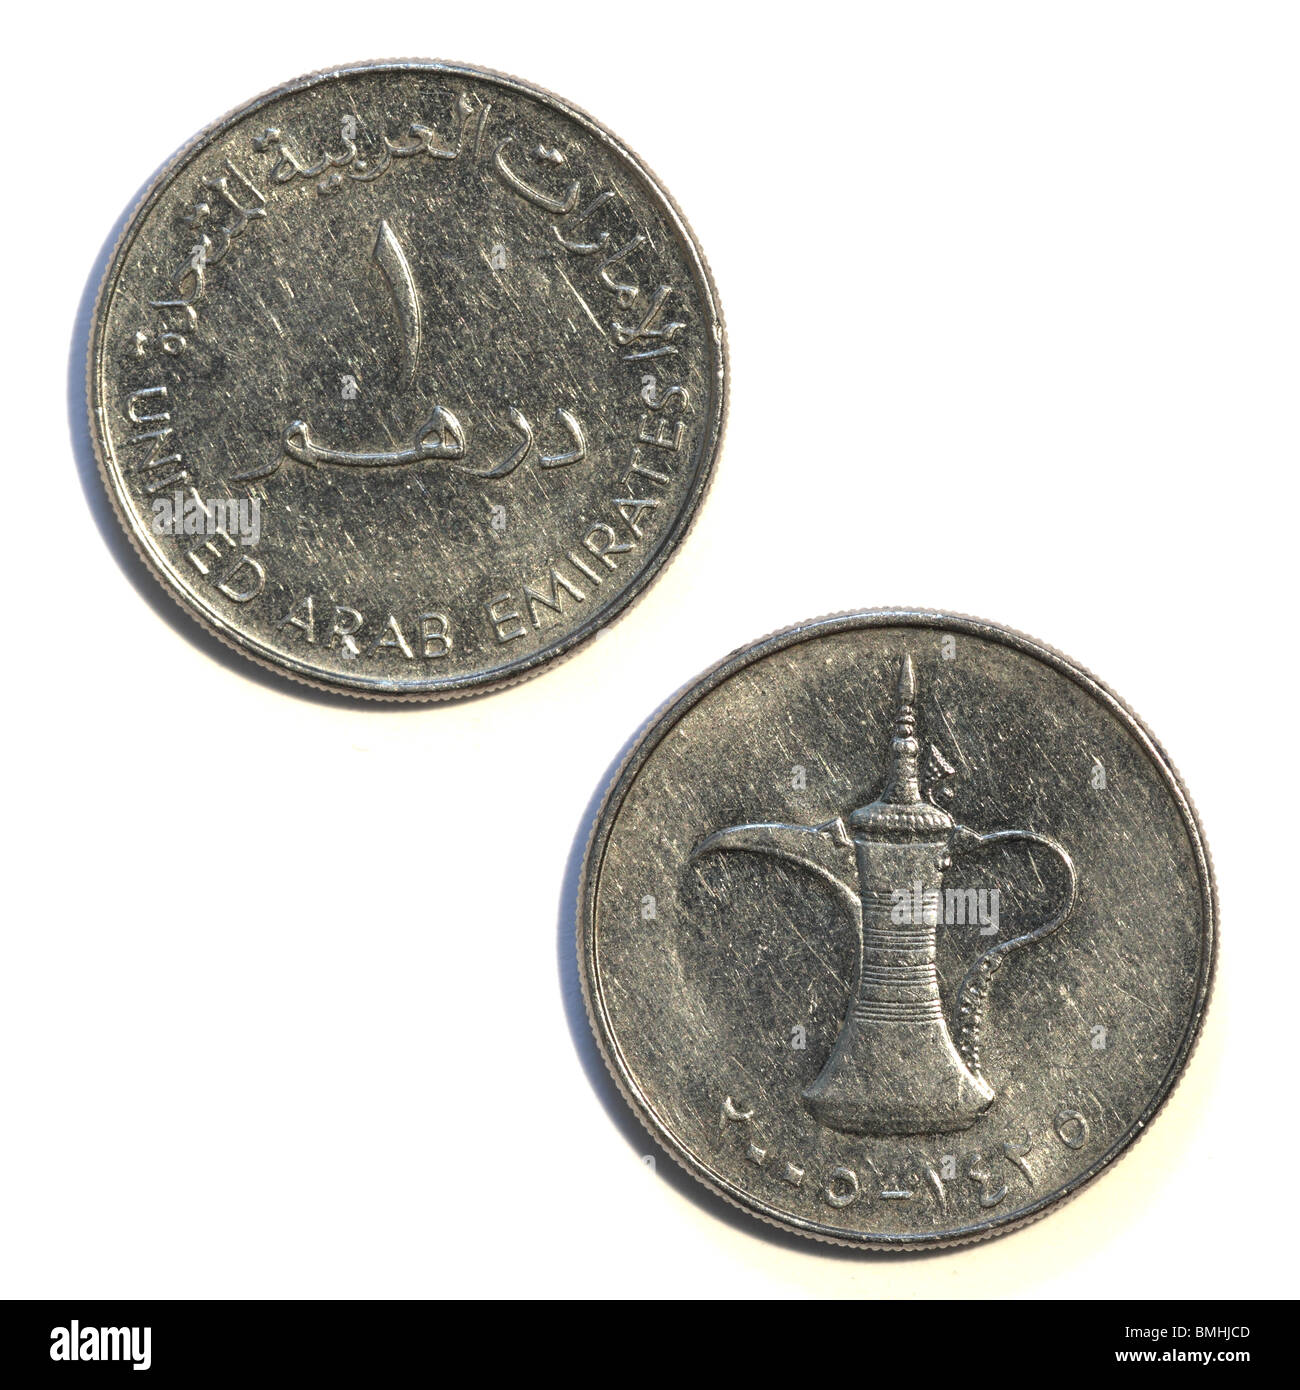 Dubai dirham coin Stock Photo: 29891133 - Alamy